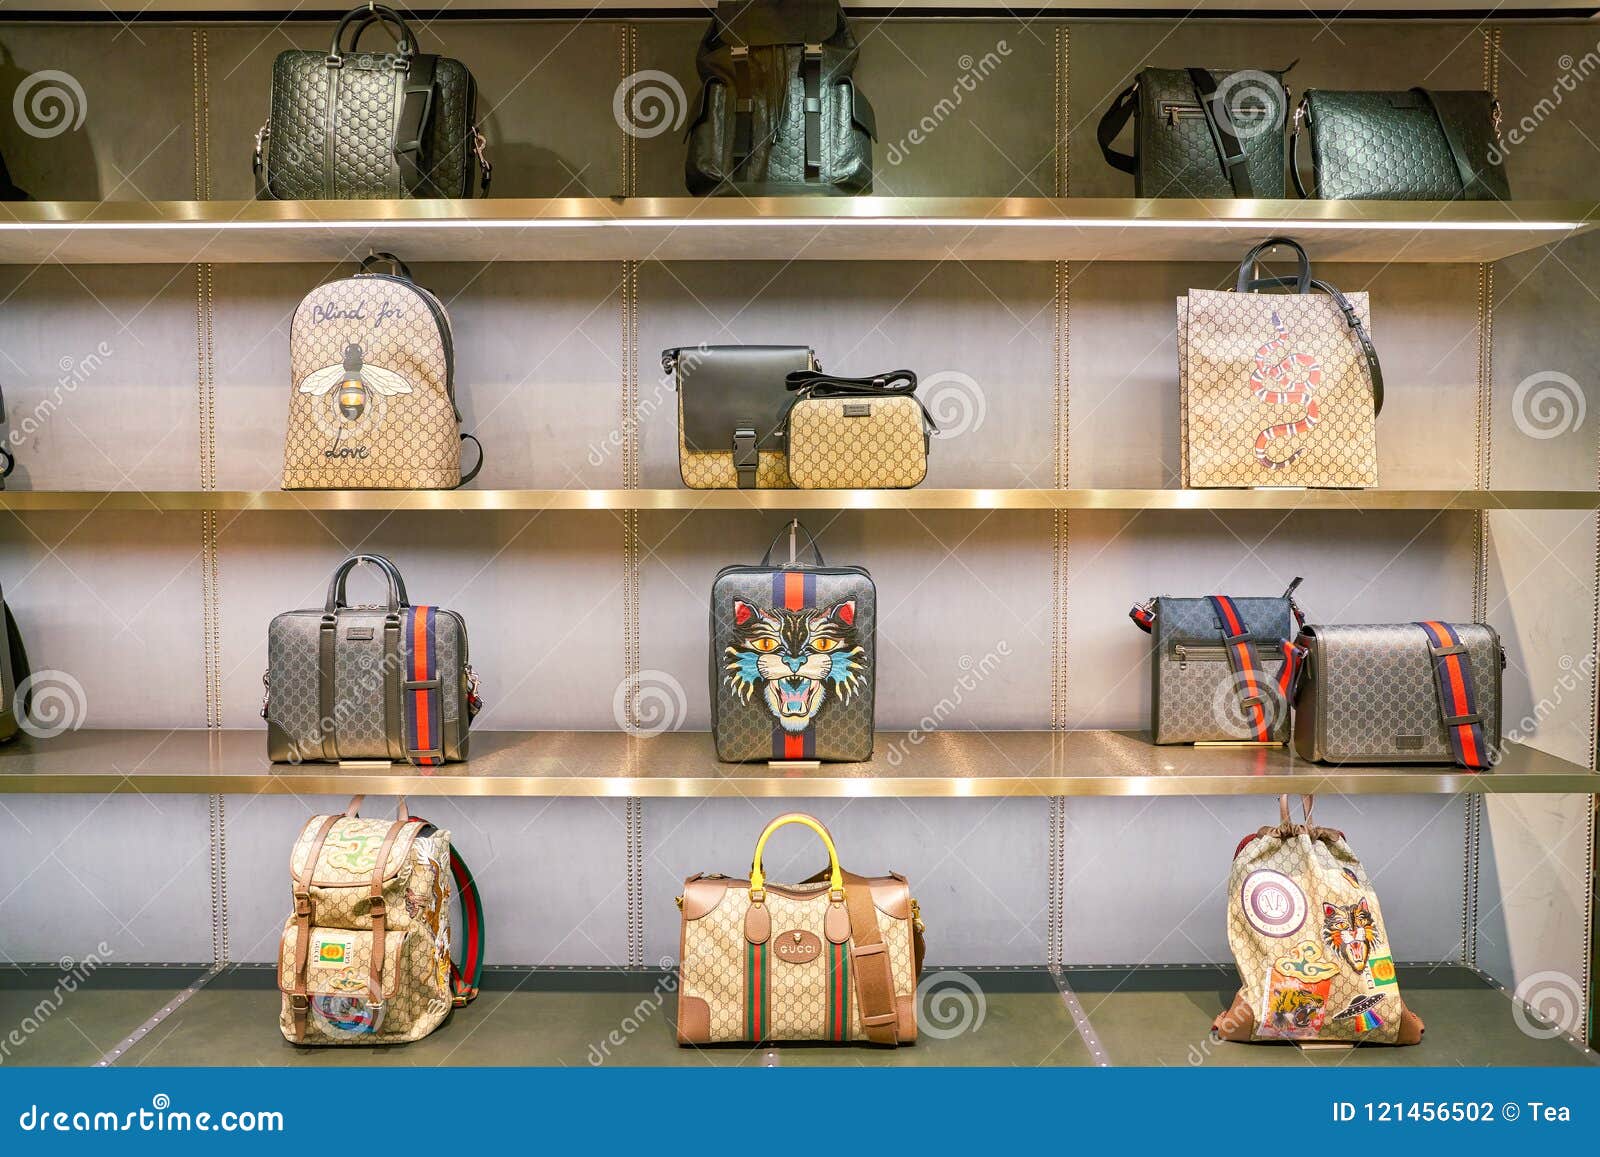 gucci store handbags